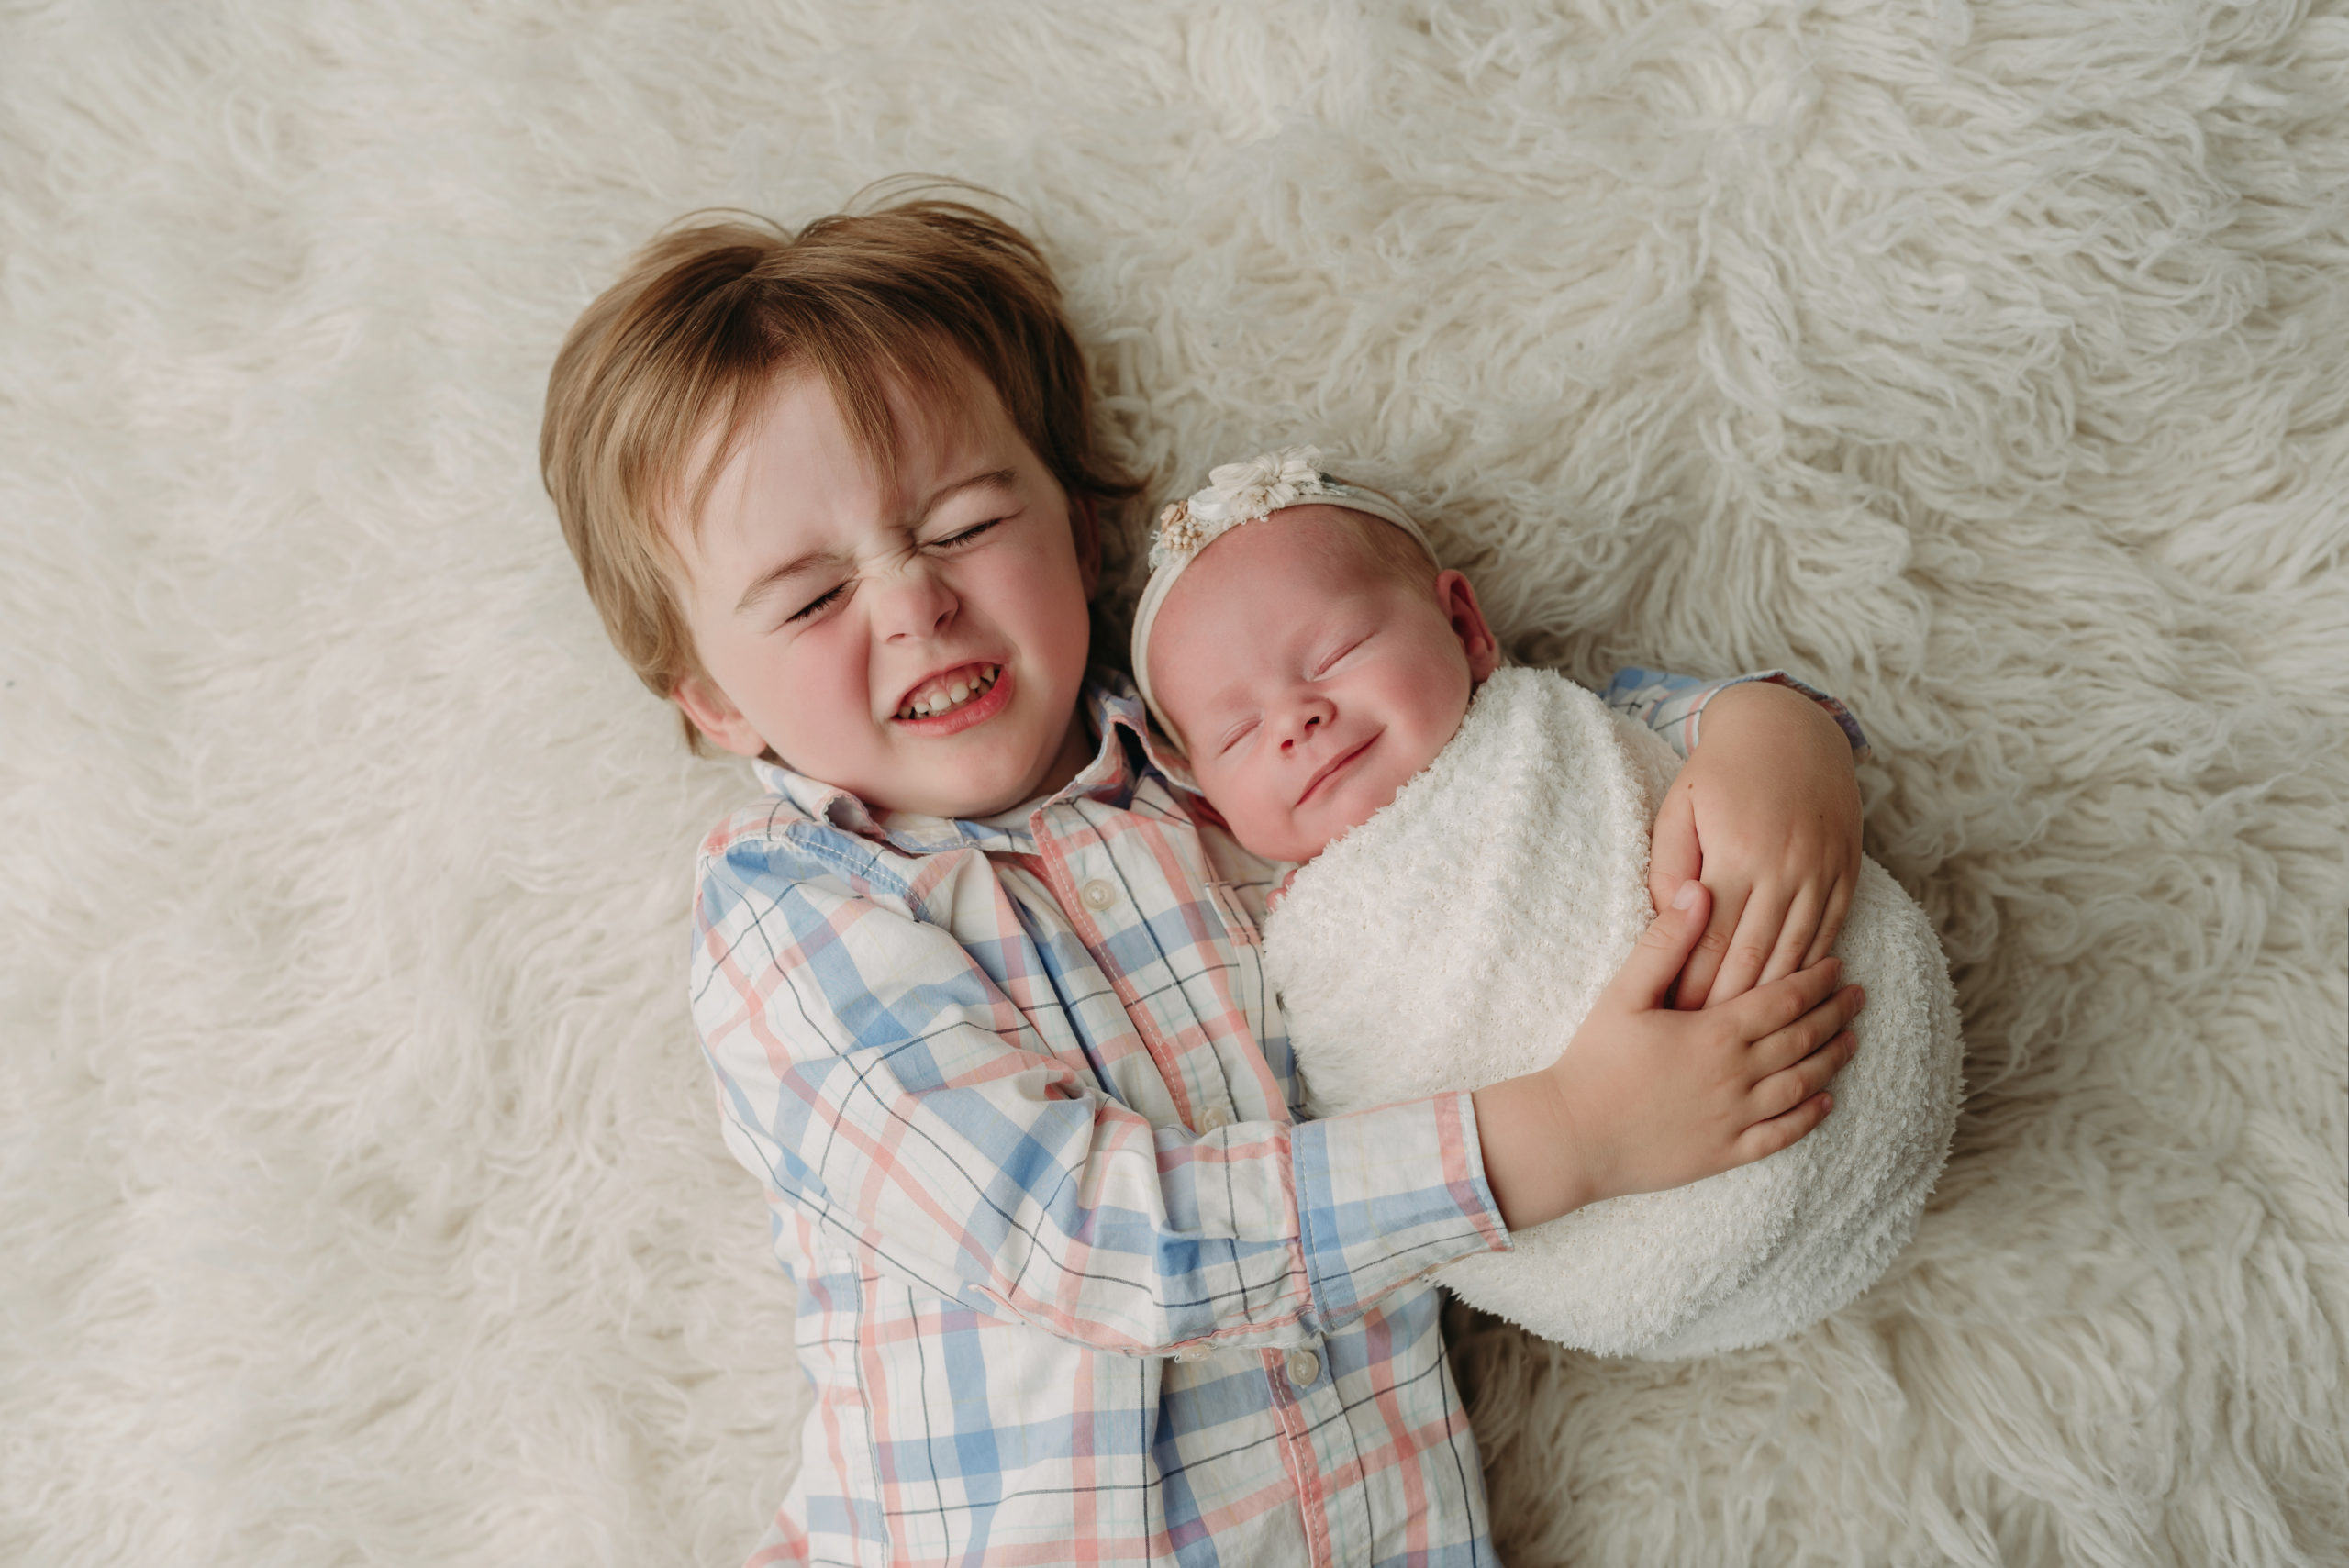 big brother sibling with newborn baby sister both smiling lying on flokati rug